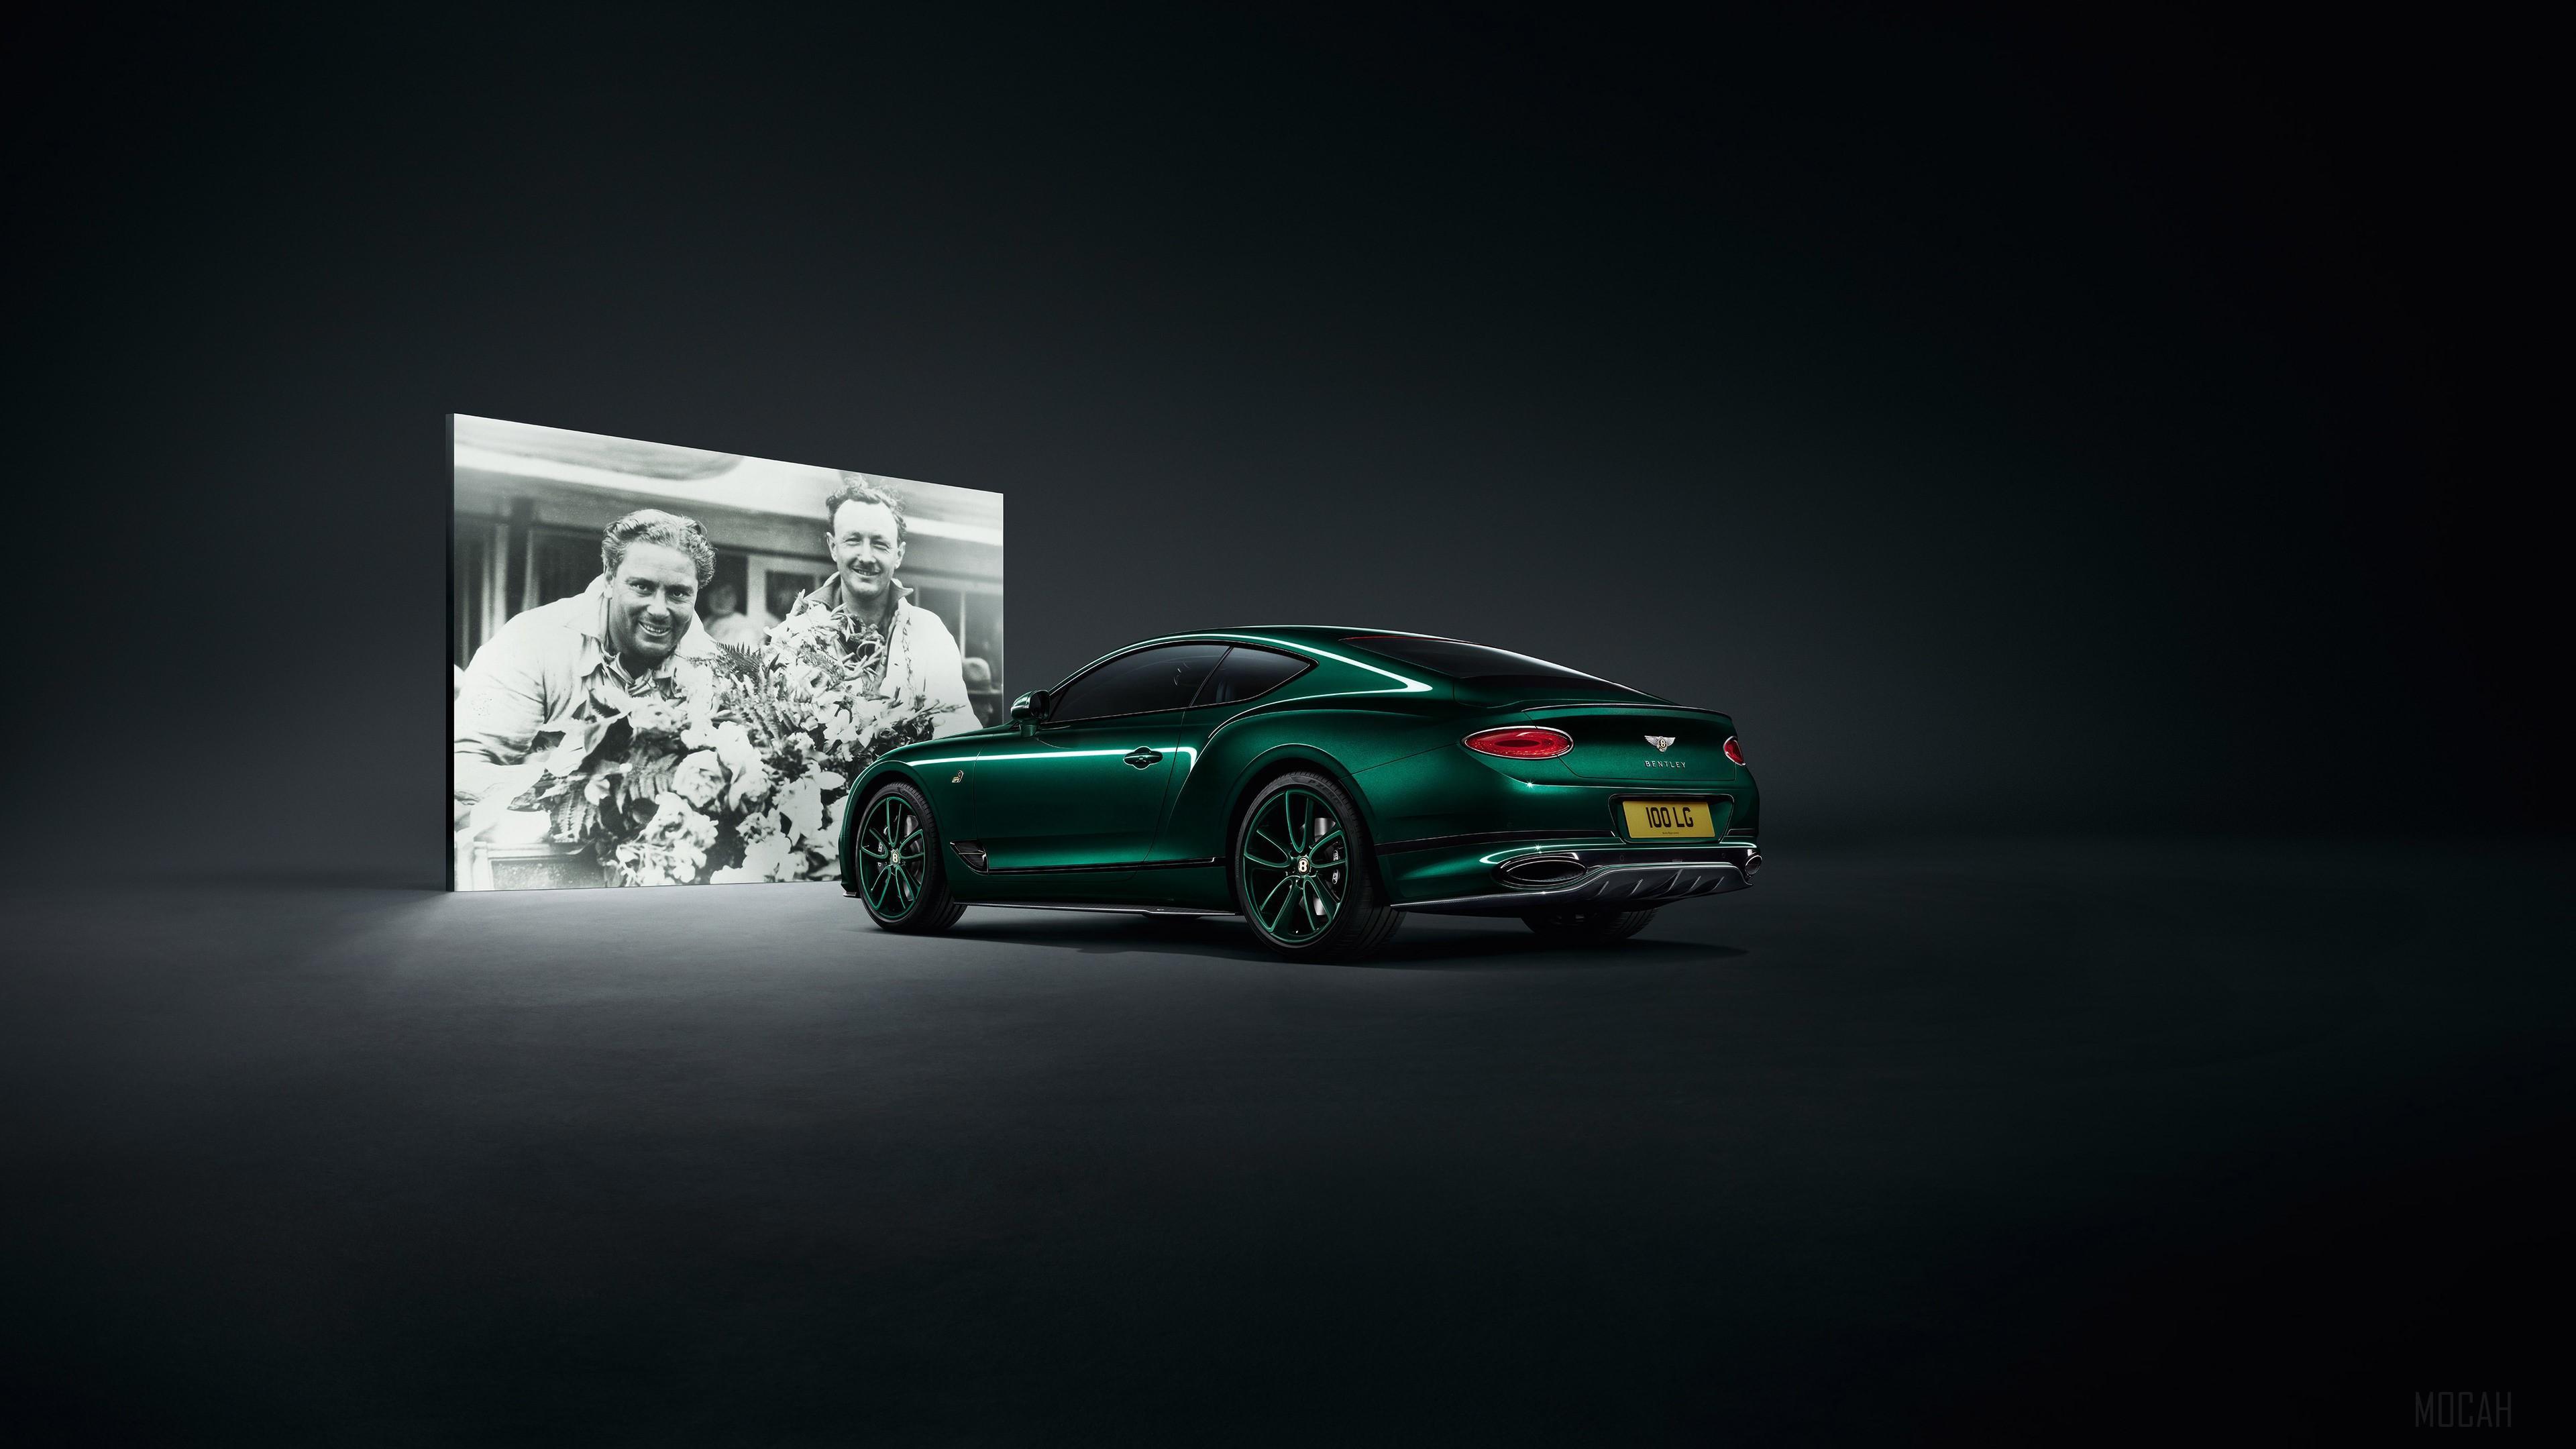 HD wallpaper, Bentley Continental Gt Number 9 Edition 2019 Rear 4K